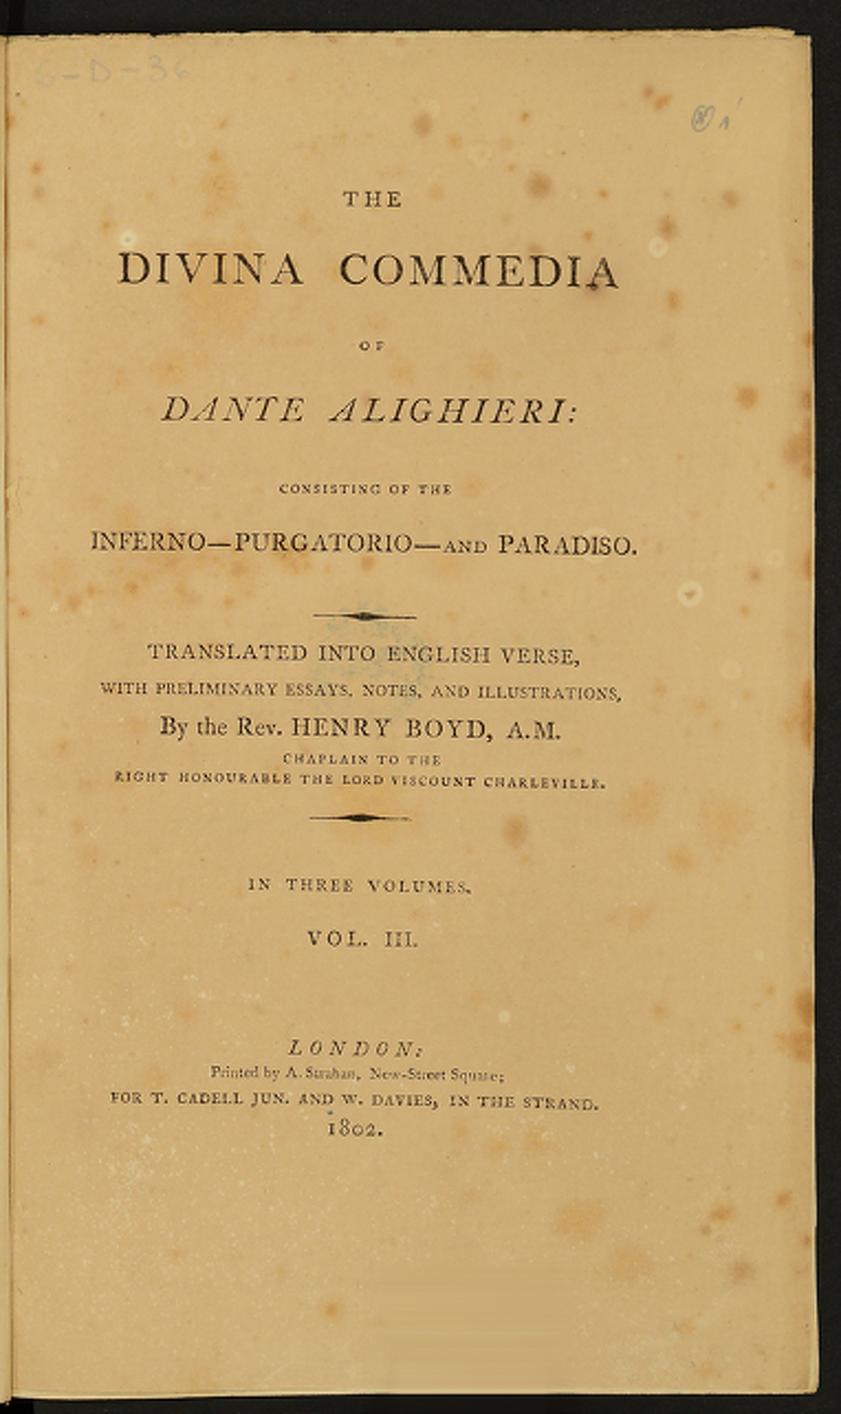 The Divina Commedia of Dante Alighieri, Consisting of the Inferno -  Purgatorio - and Paradiso, Dante Alighieri, Rev. Henry Boyd